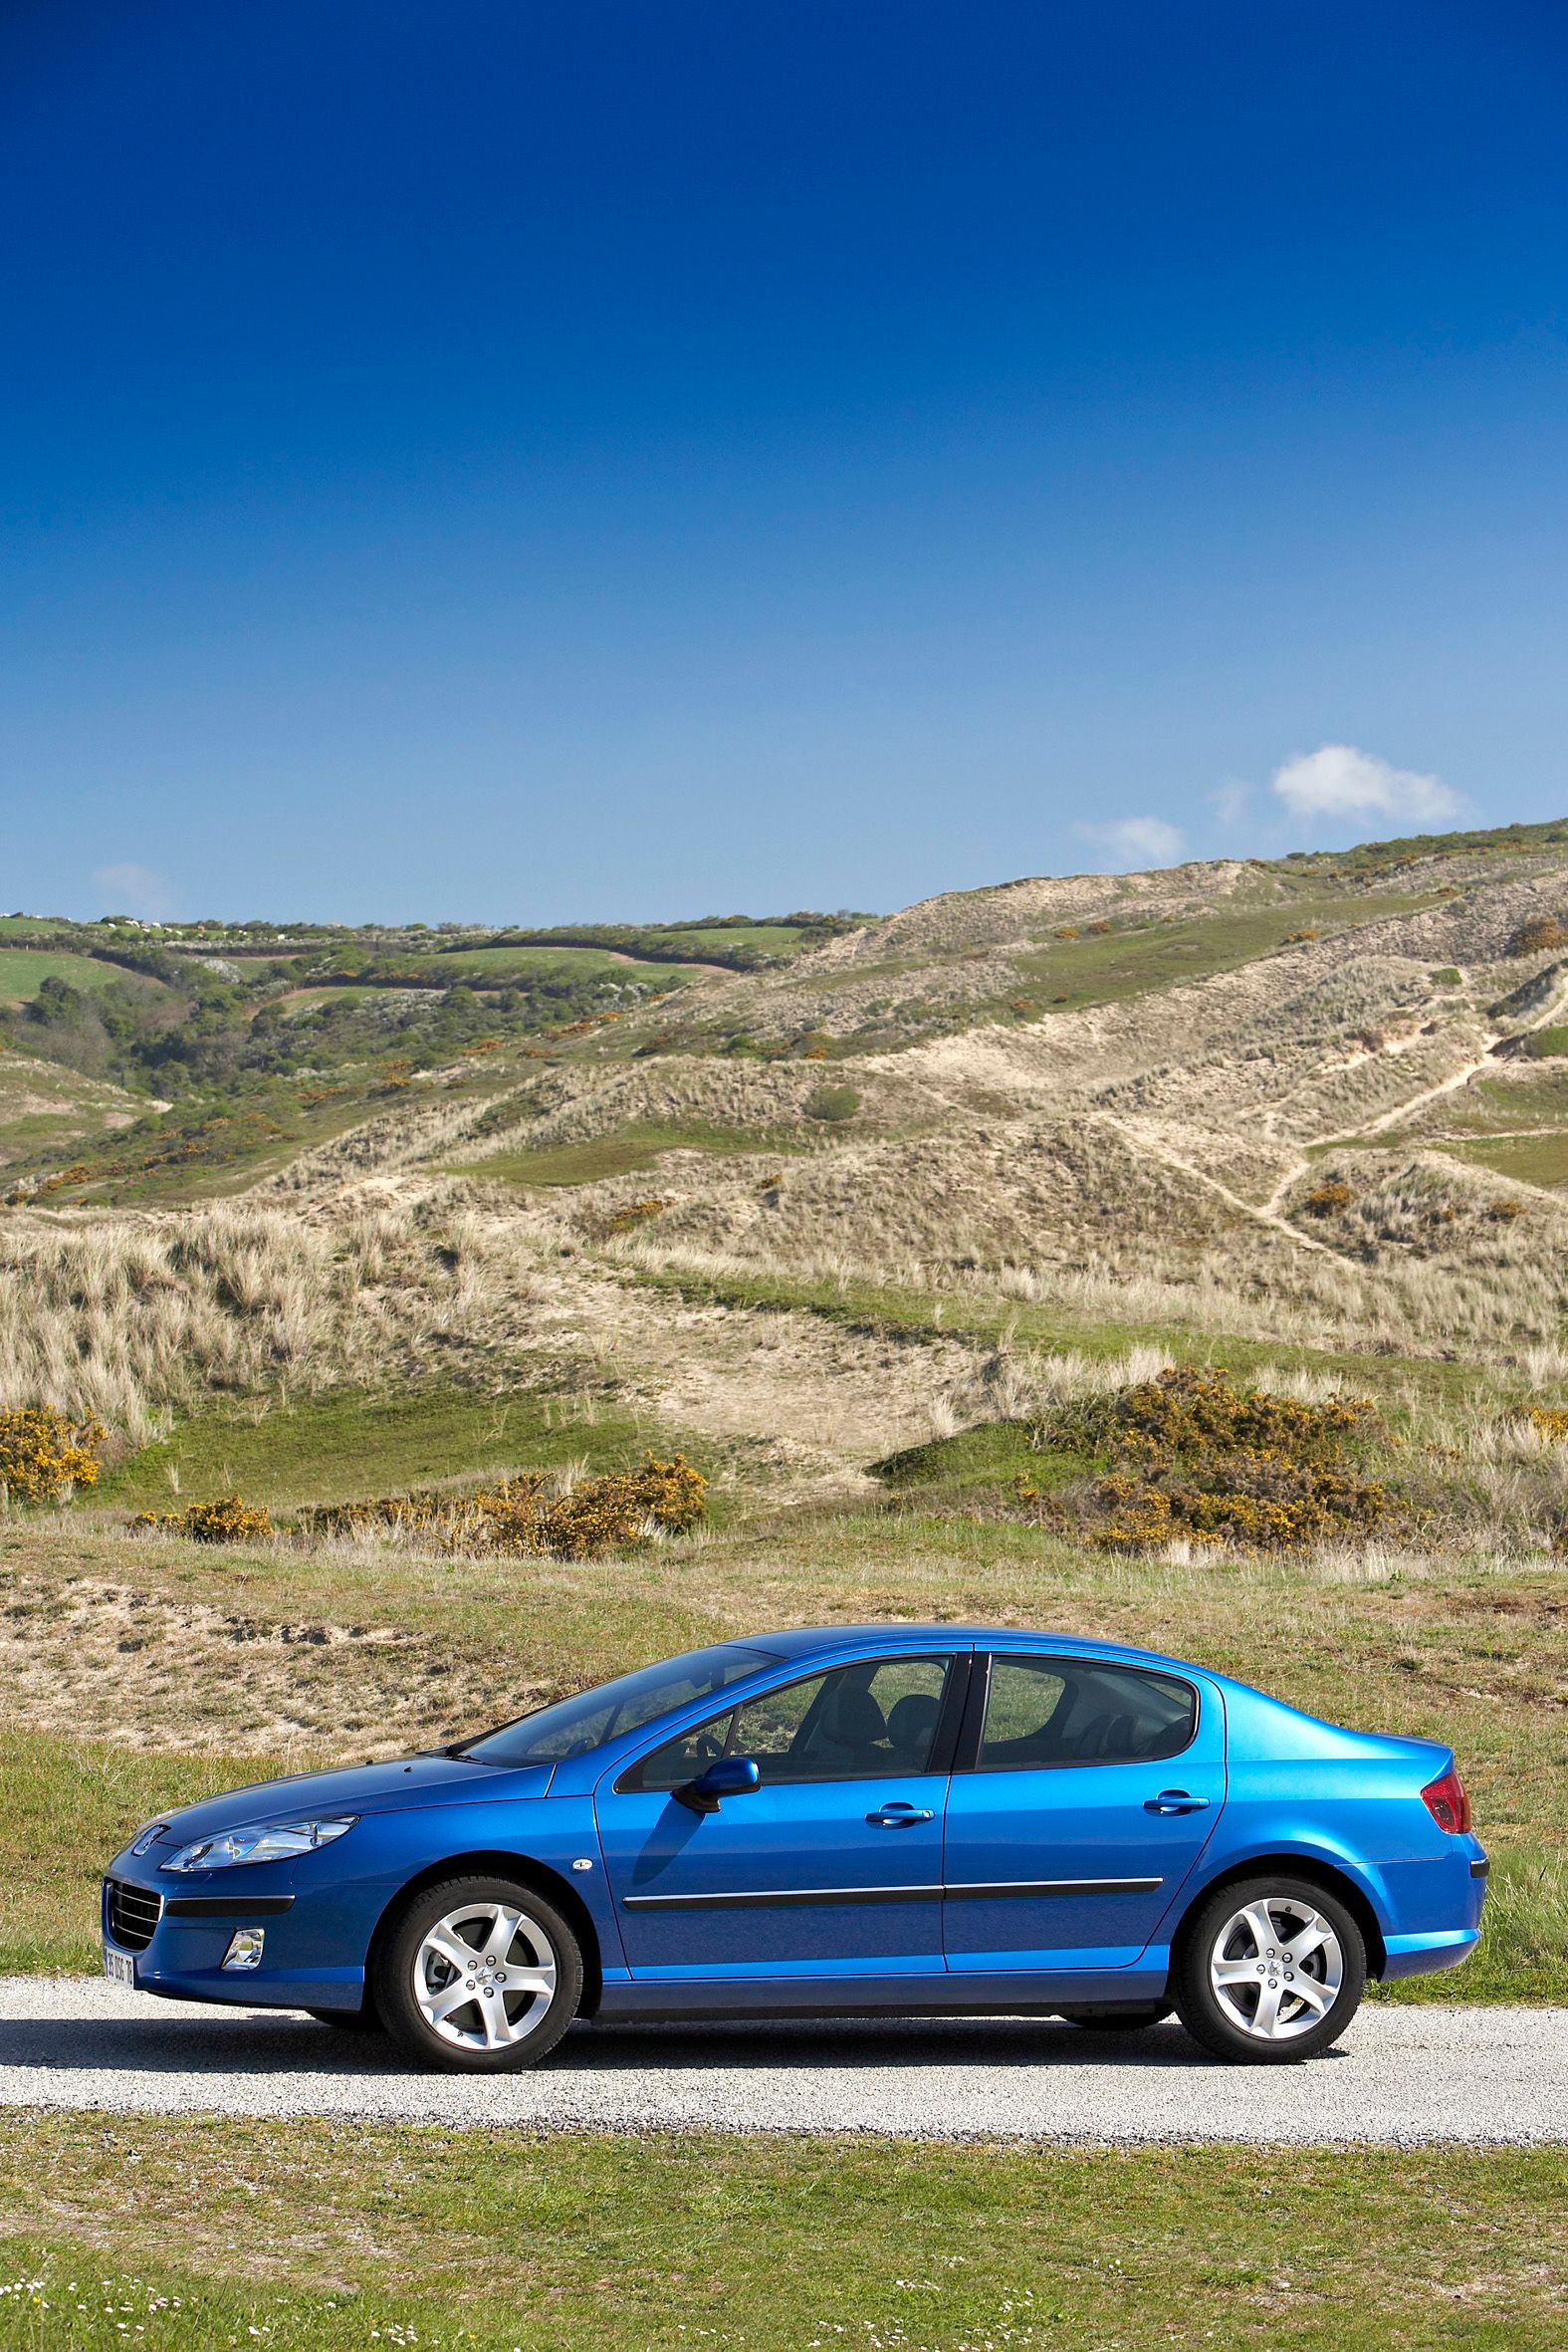 Road test rewind: Peugeot 407